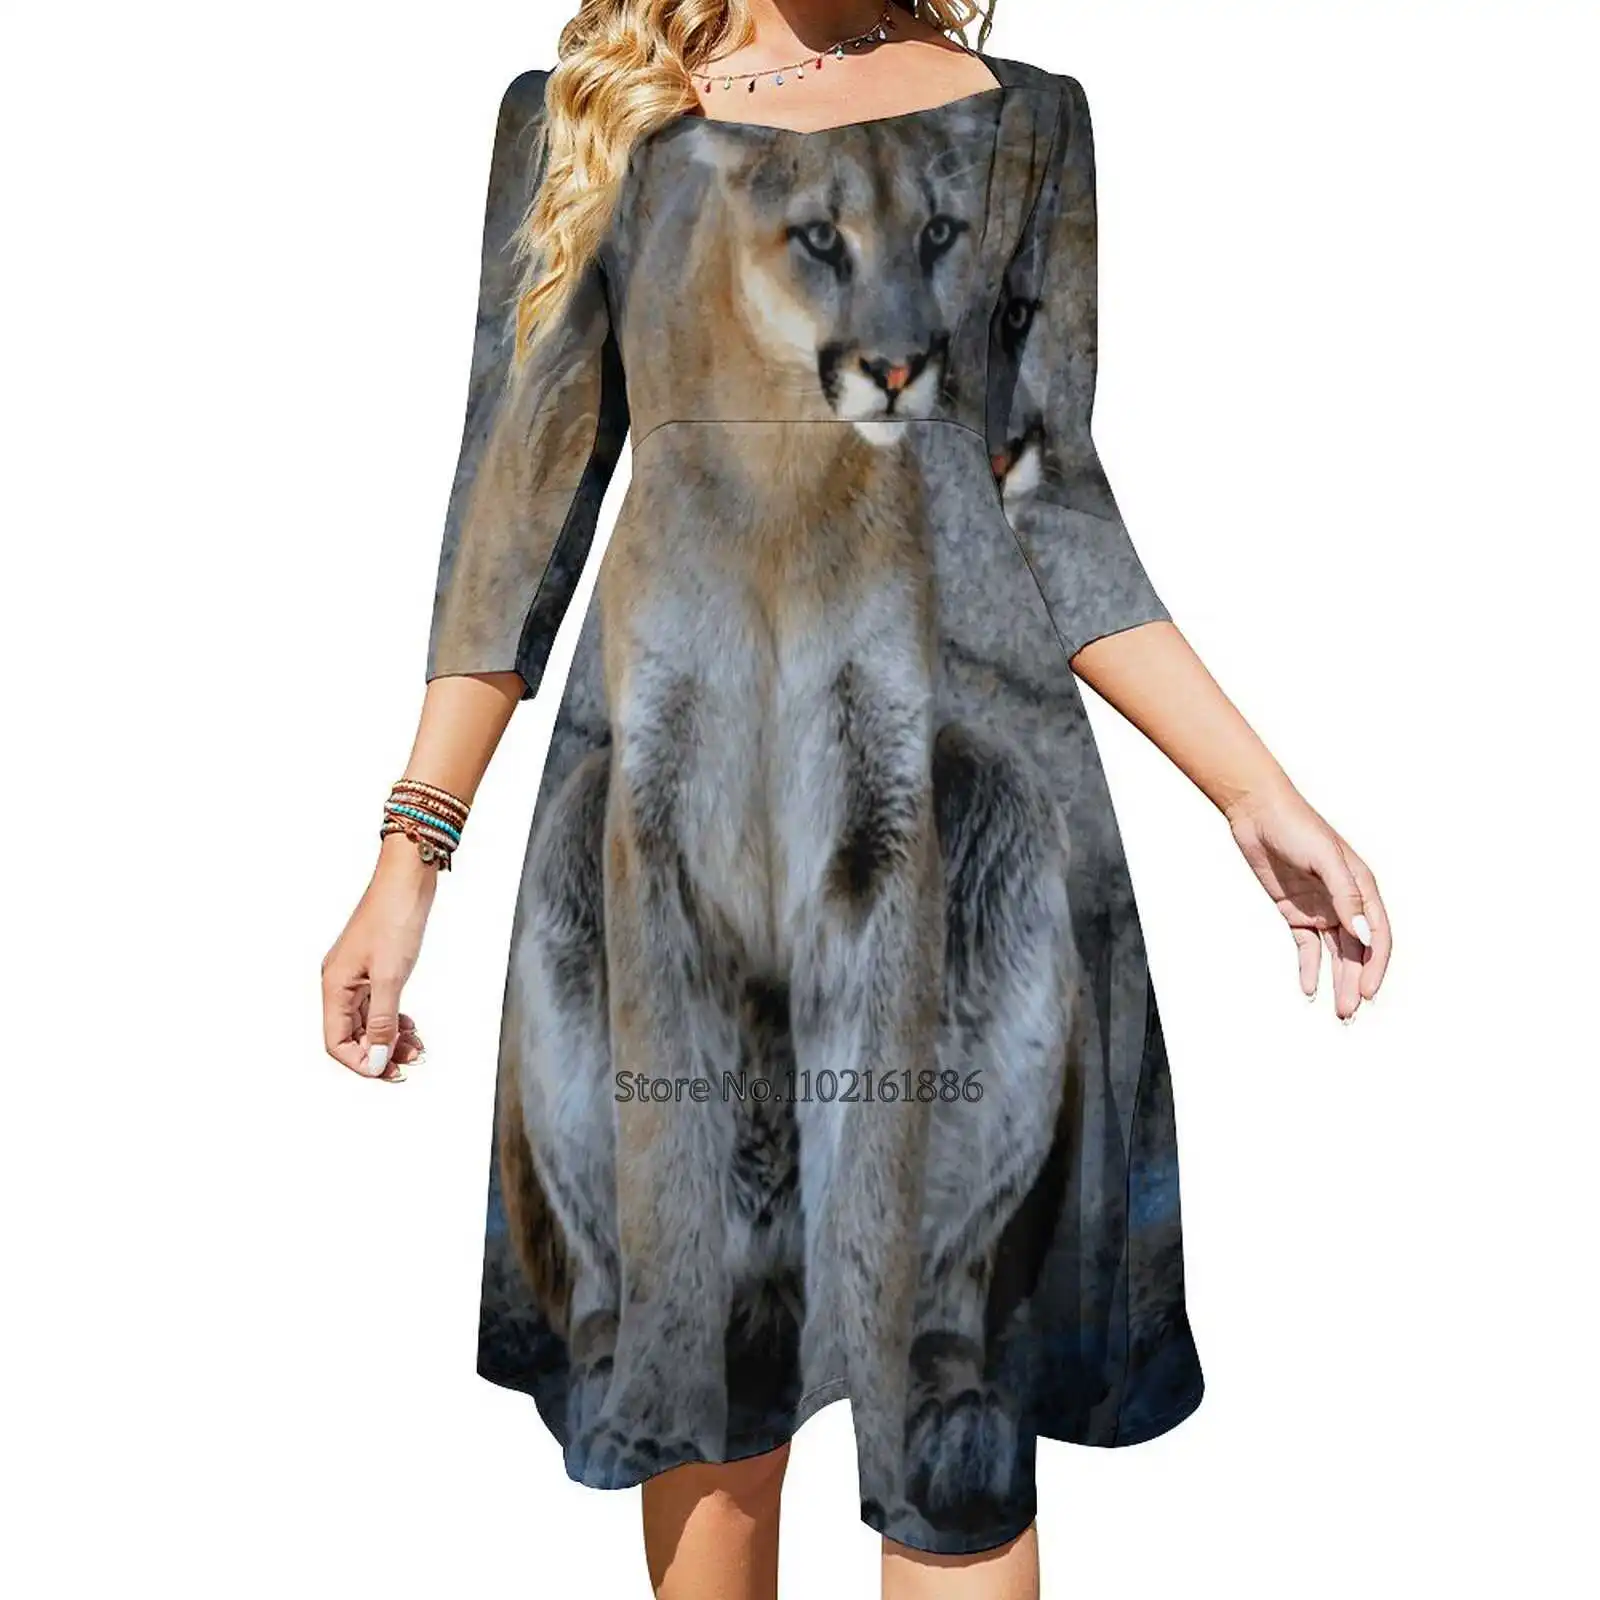 

Cougar Back Lacing Backless Dress Square Neck Dress Fashion Design Large Size Loose Dress Cougar Animal Wild Nature Portrait